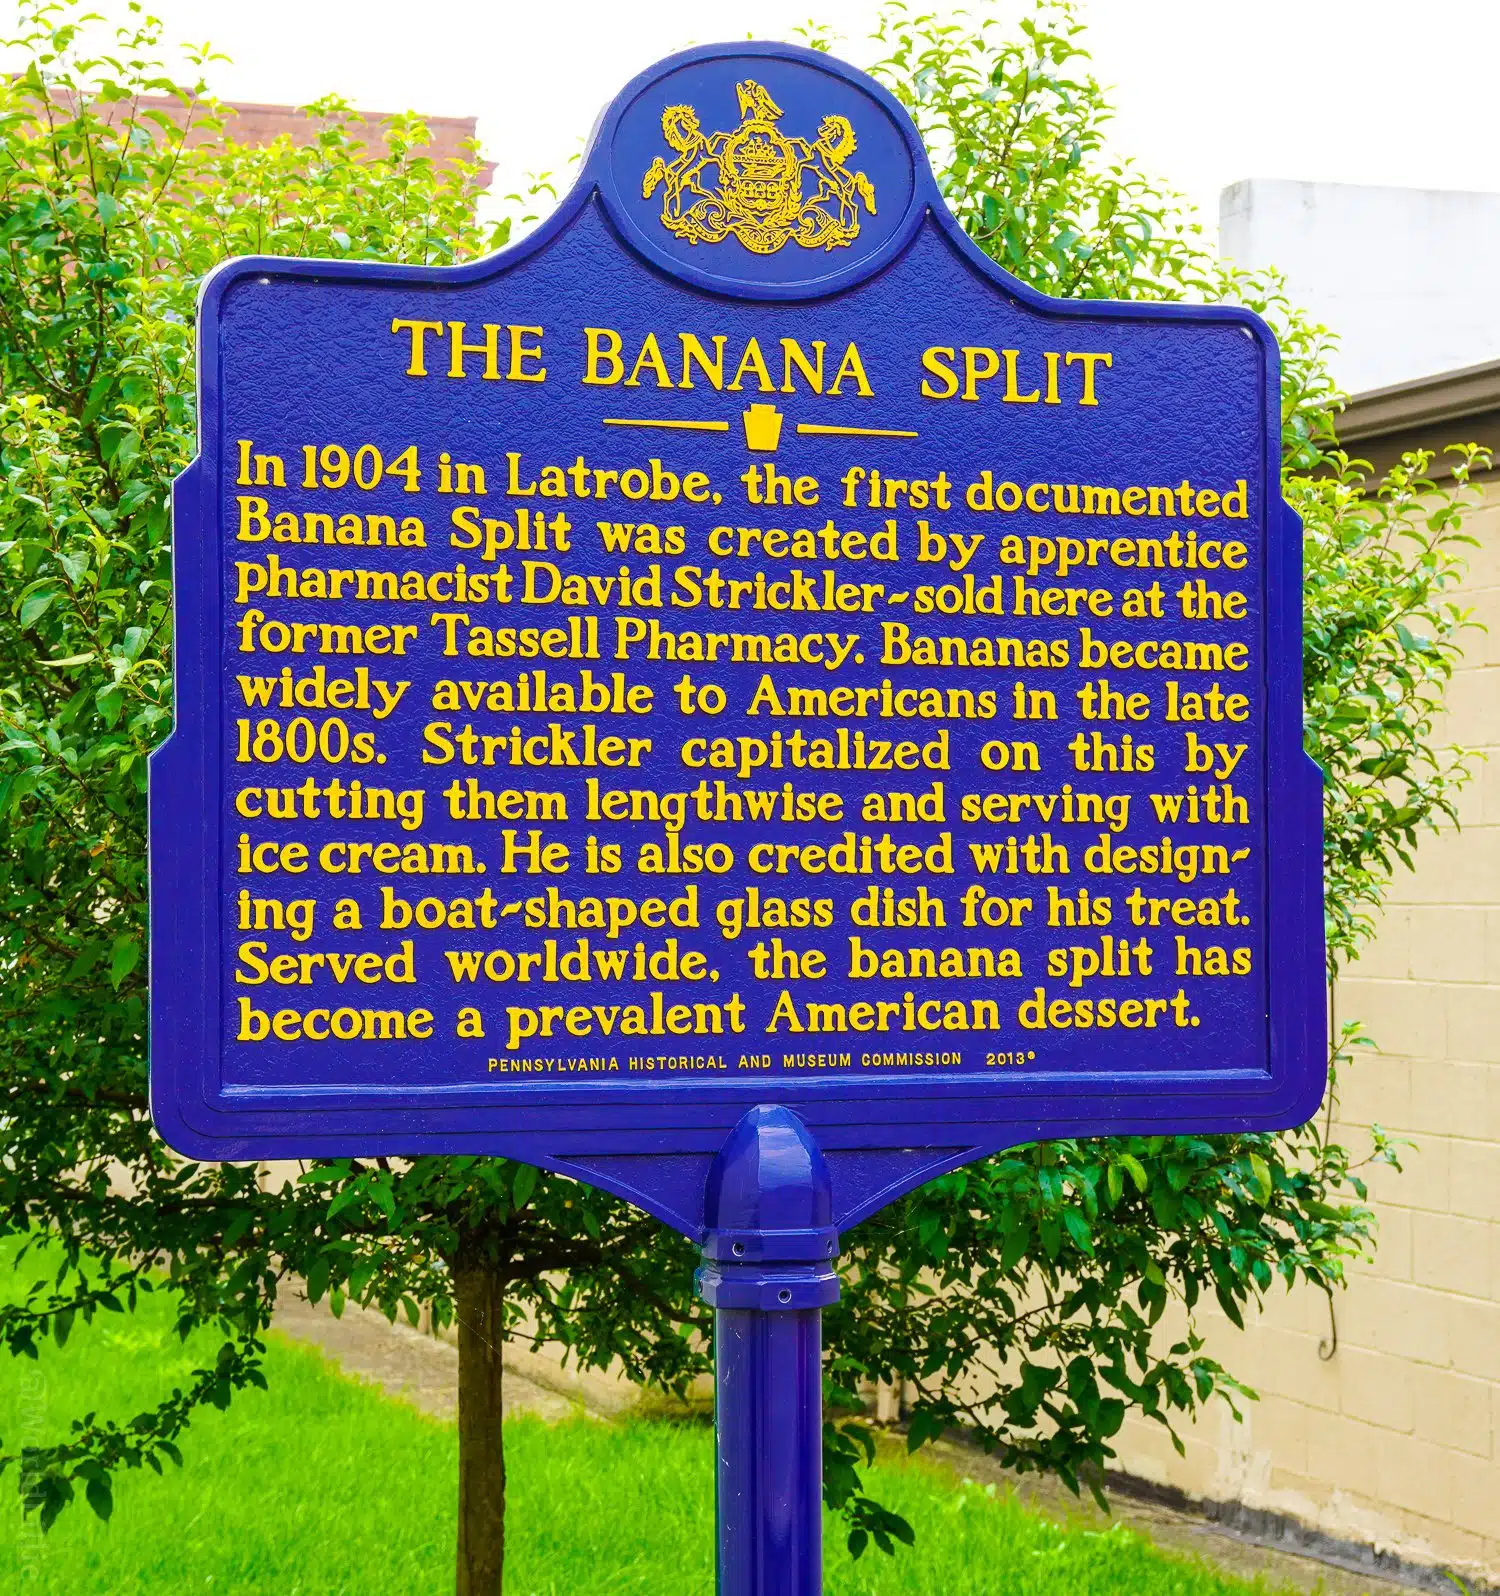 Banana Split history on a plaque.